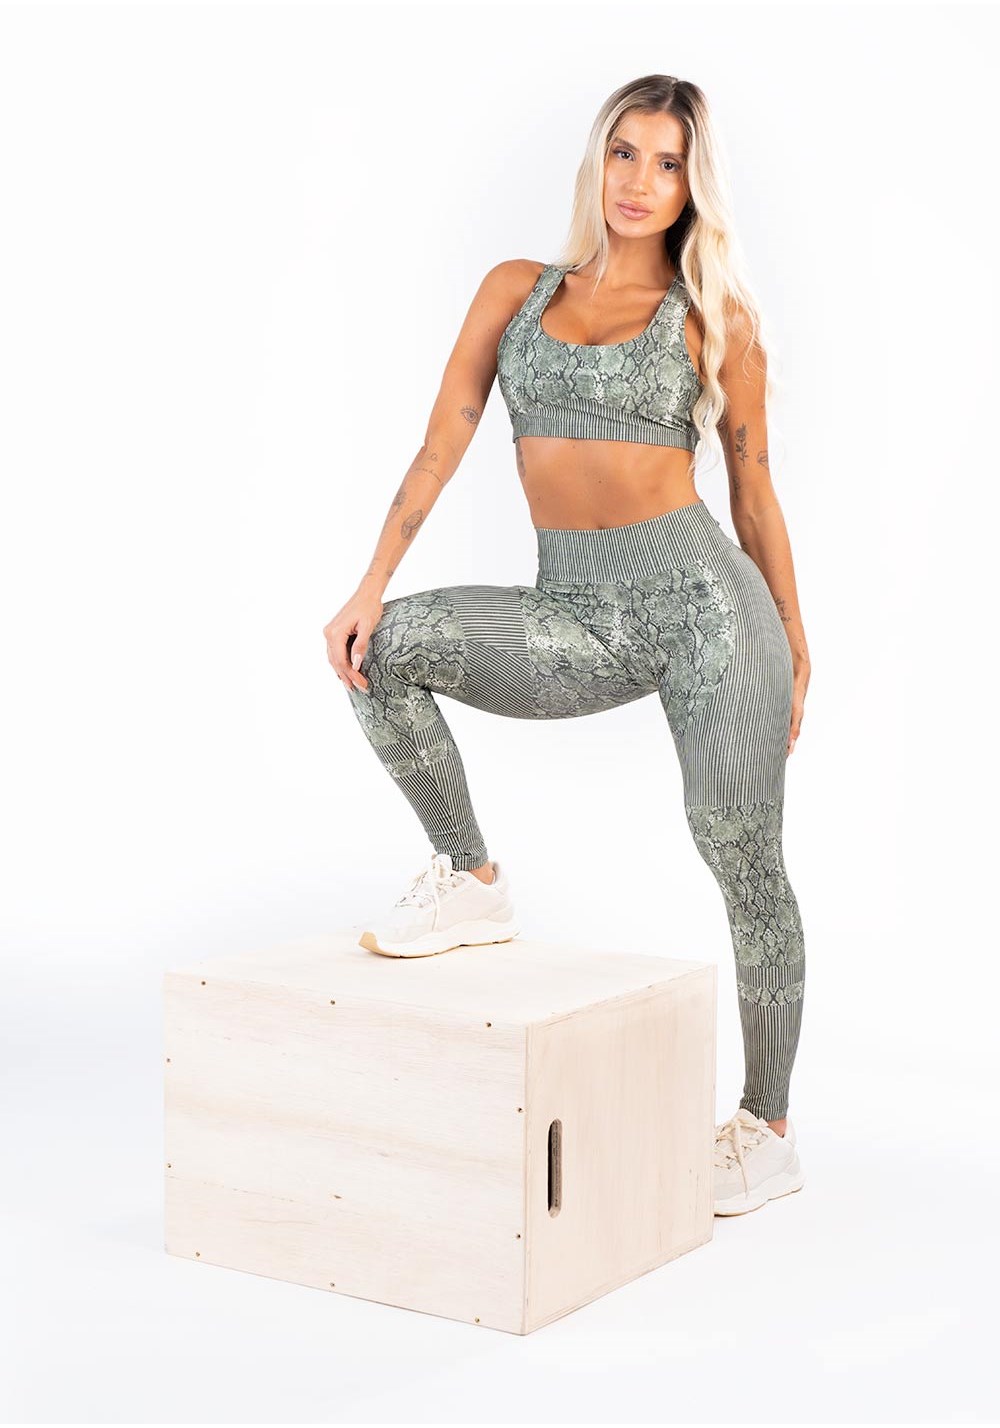 Legging fitness feminina new printed estampada skin verde